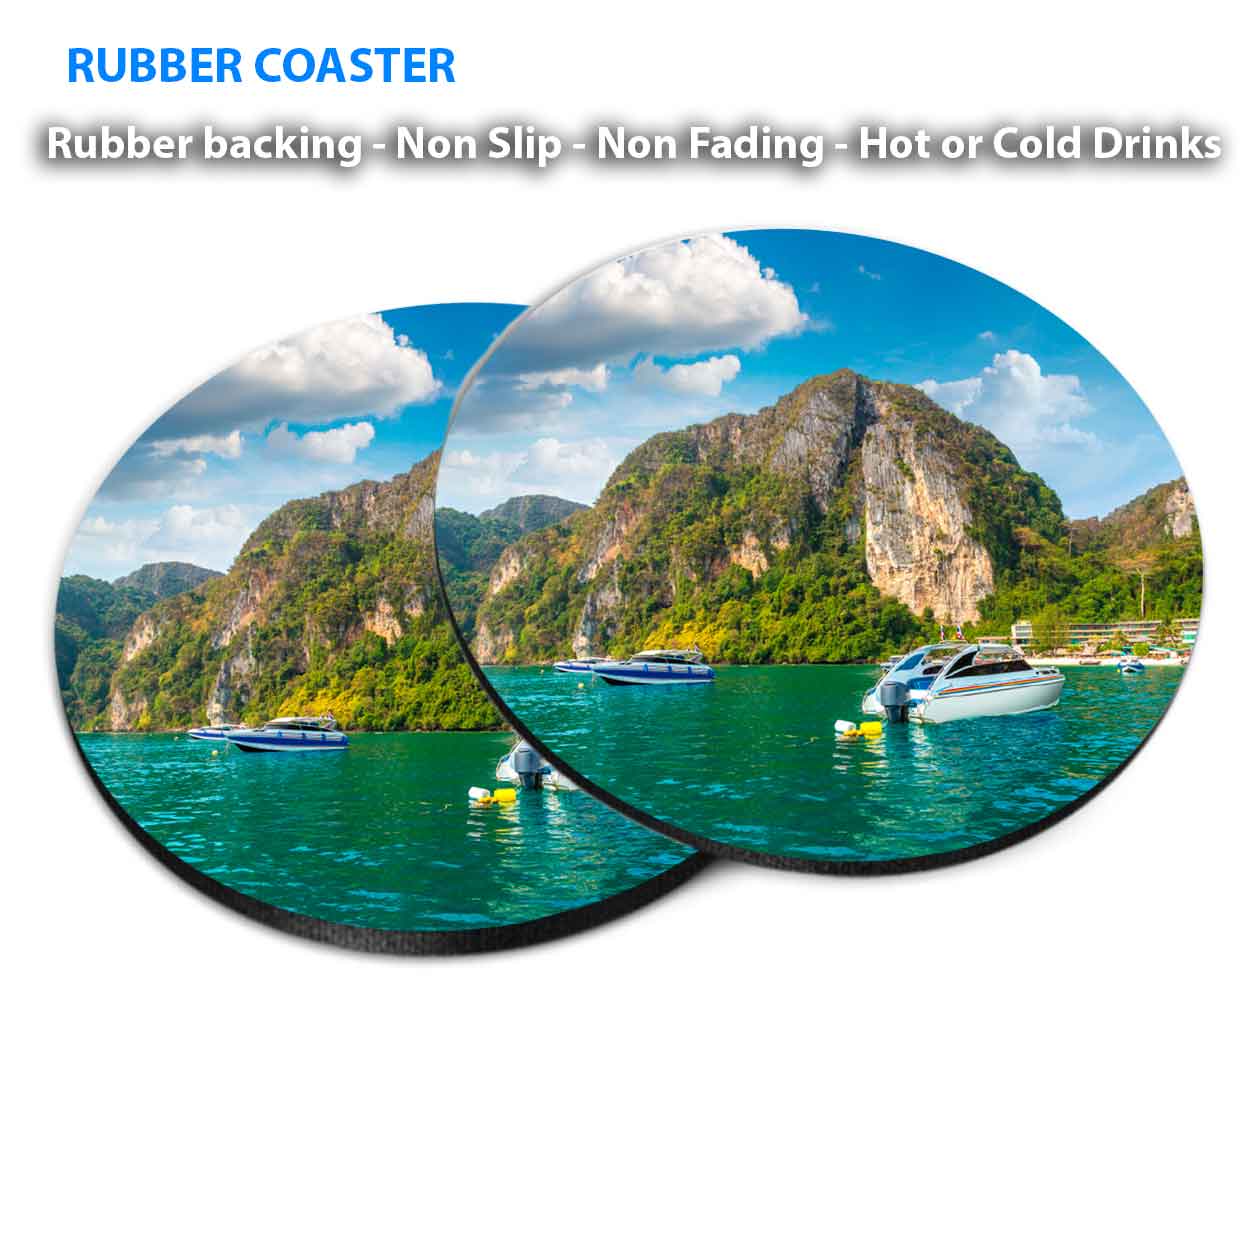 Koh Phi Phi Don island, Thailand Coasters Wood & Rubber - Set of 6 Coasters